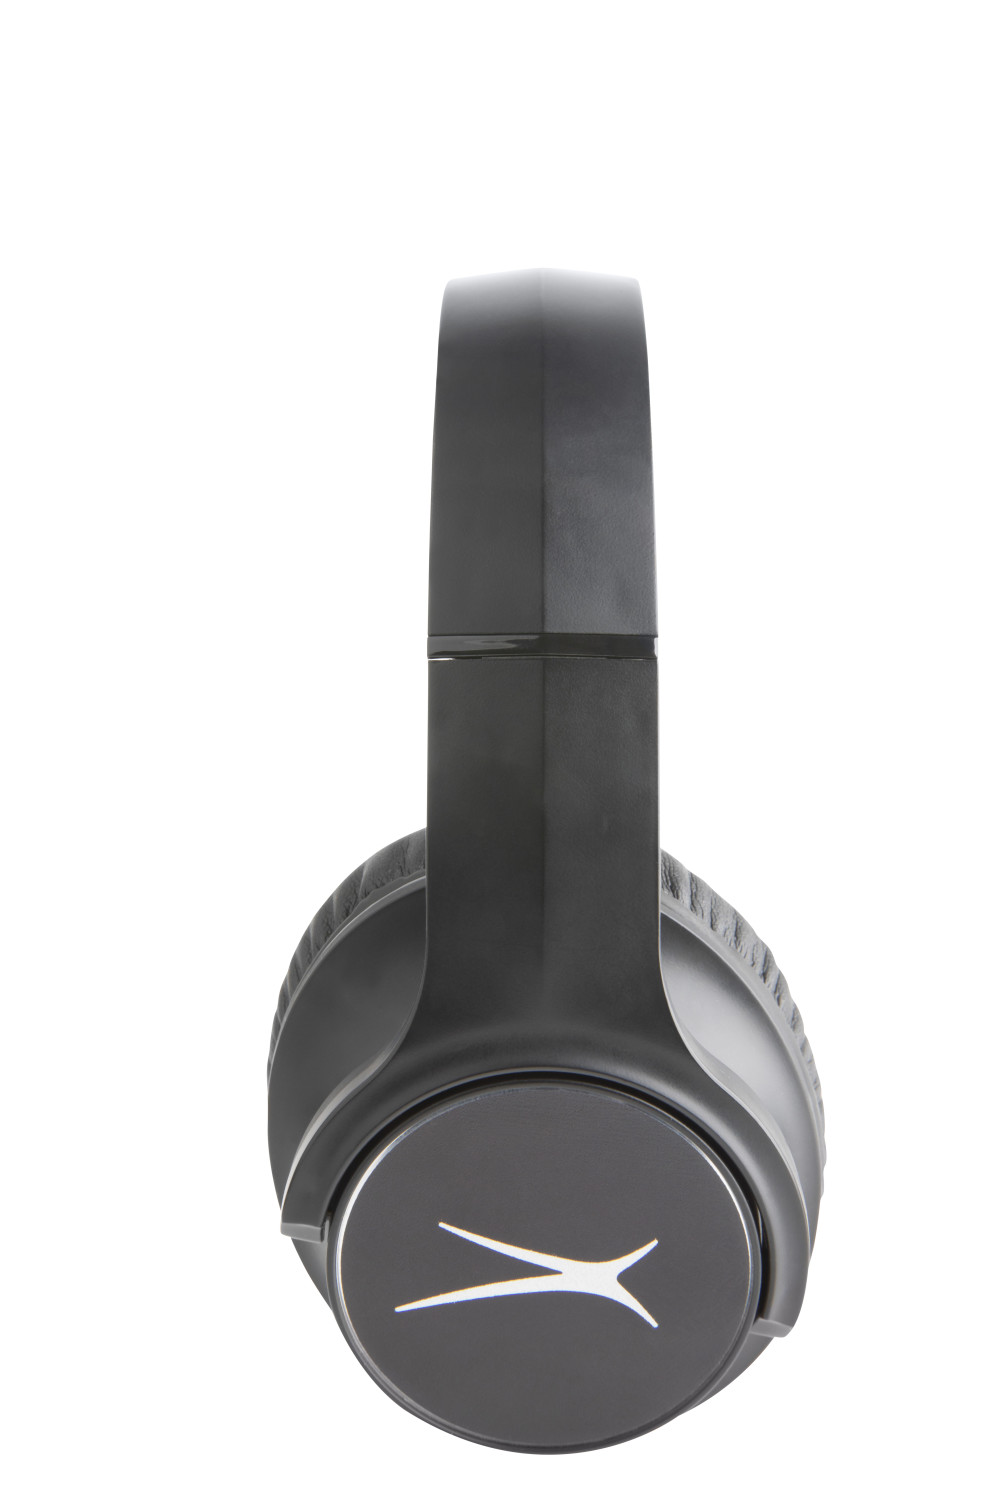 Altec Lansing R3volution X Bluetooth On-Ear Headphones, Noise-Canceling, Black, MZX009-BLK - image 3 of 5